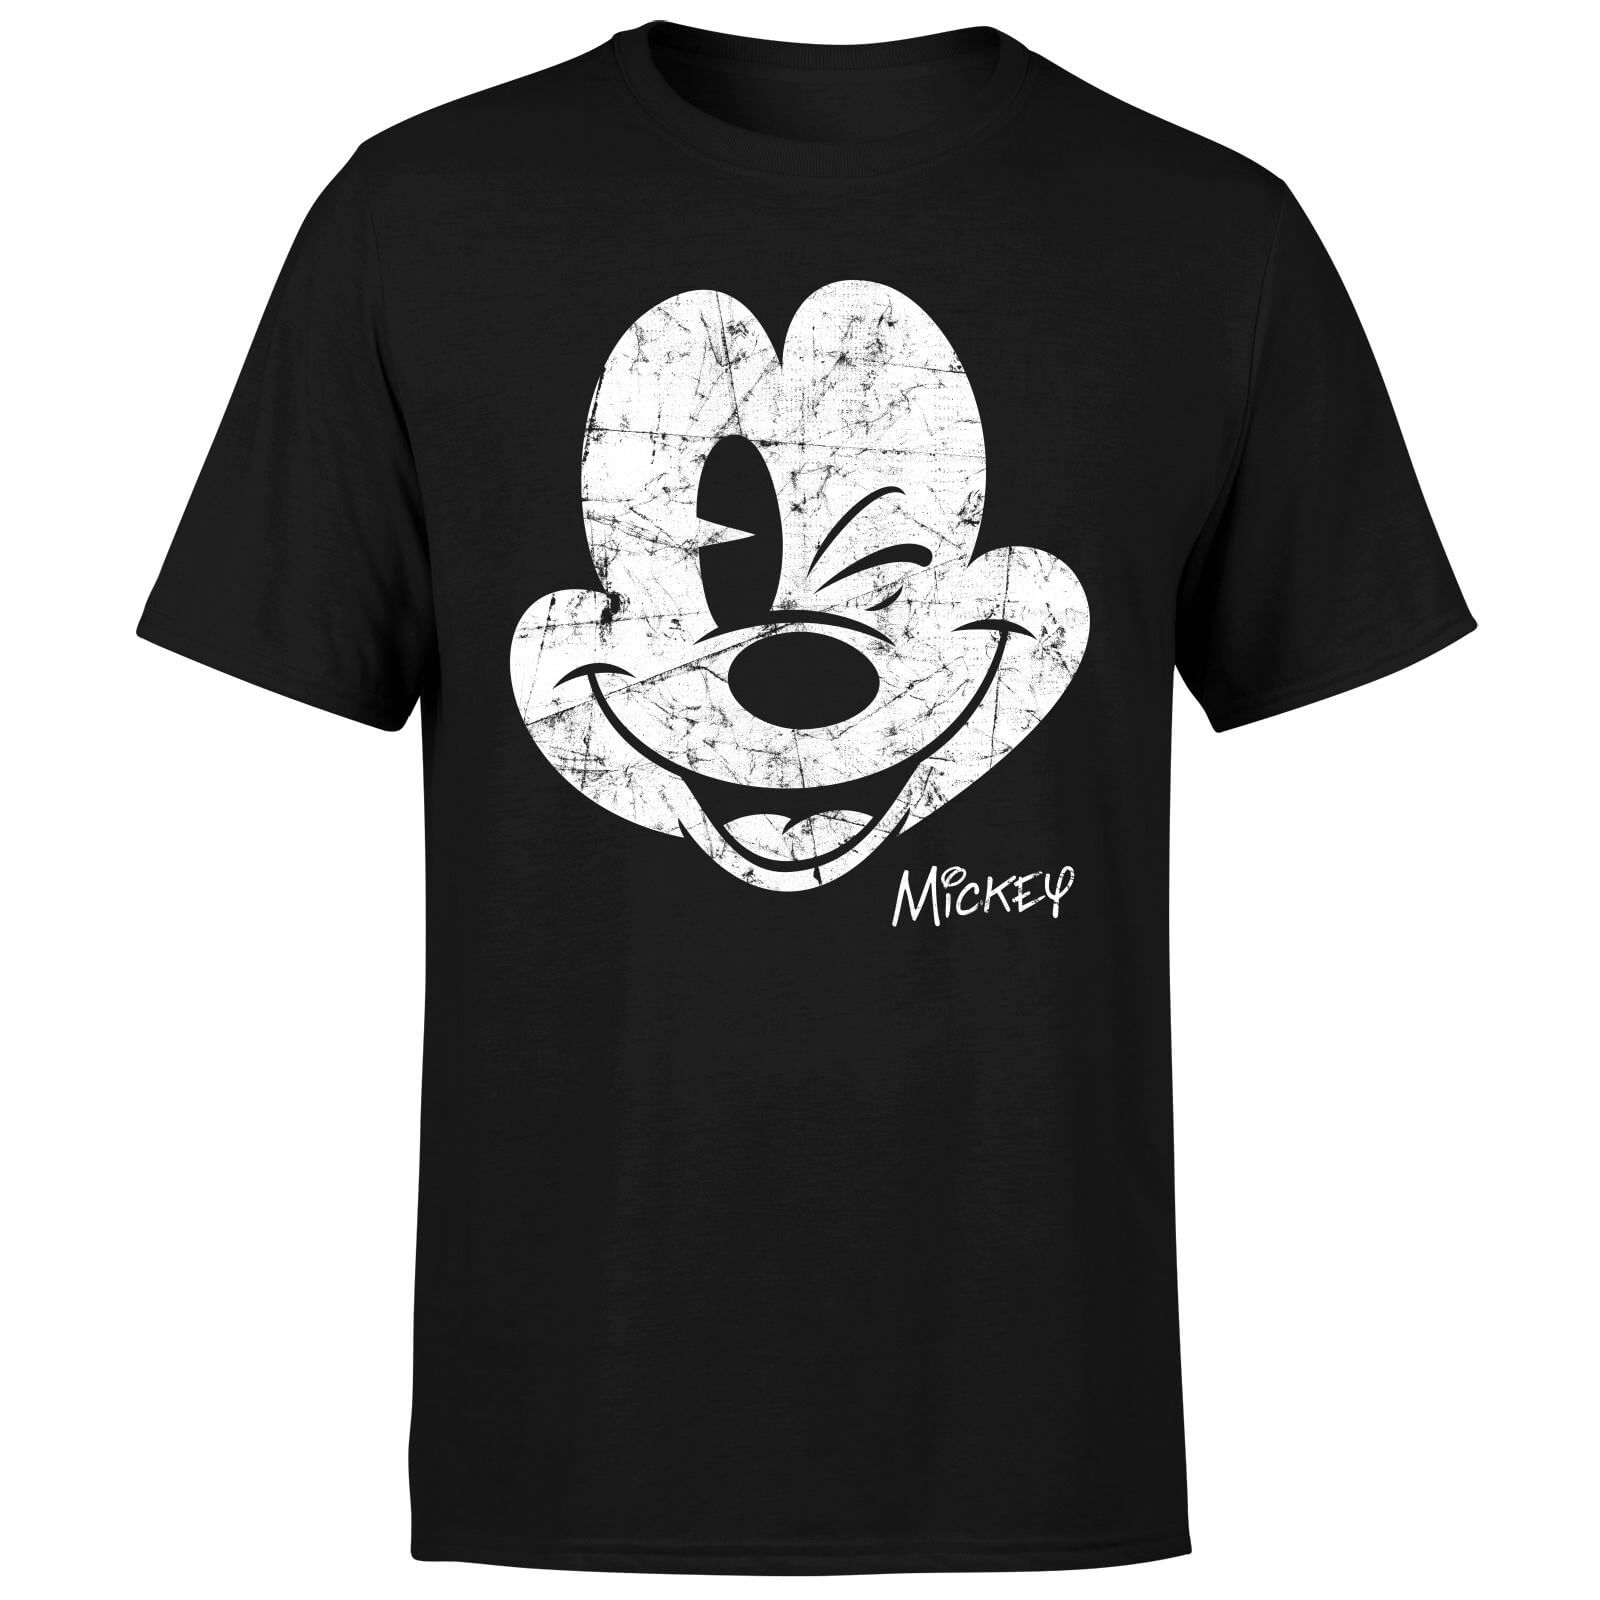 Disney Mickey Mouse Worn Face T-Shirt - Black - XS